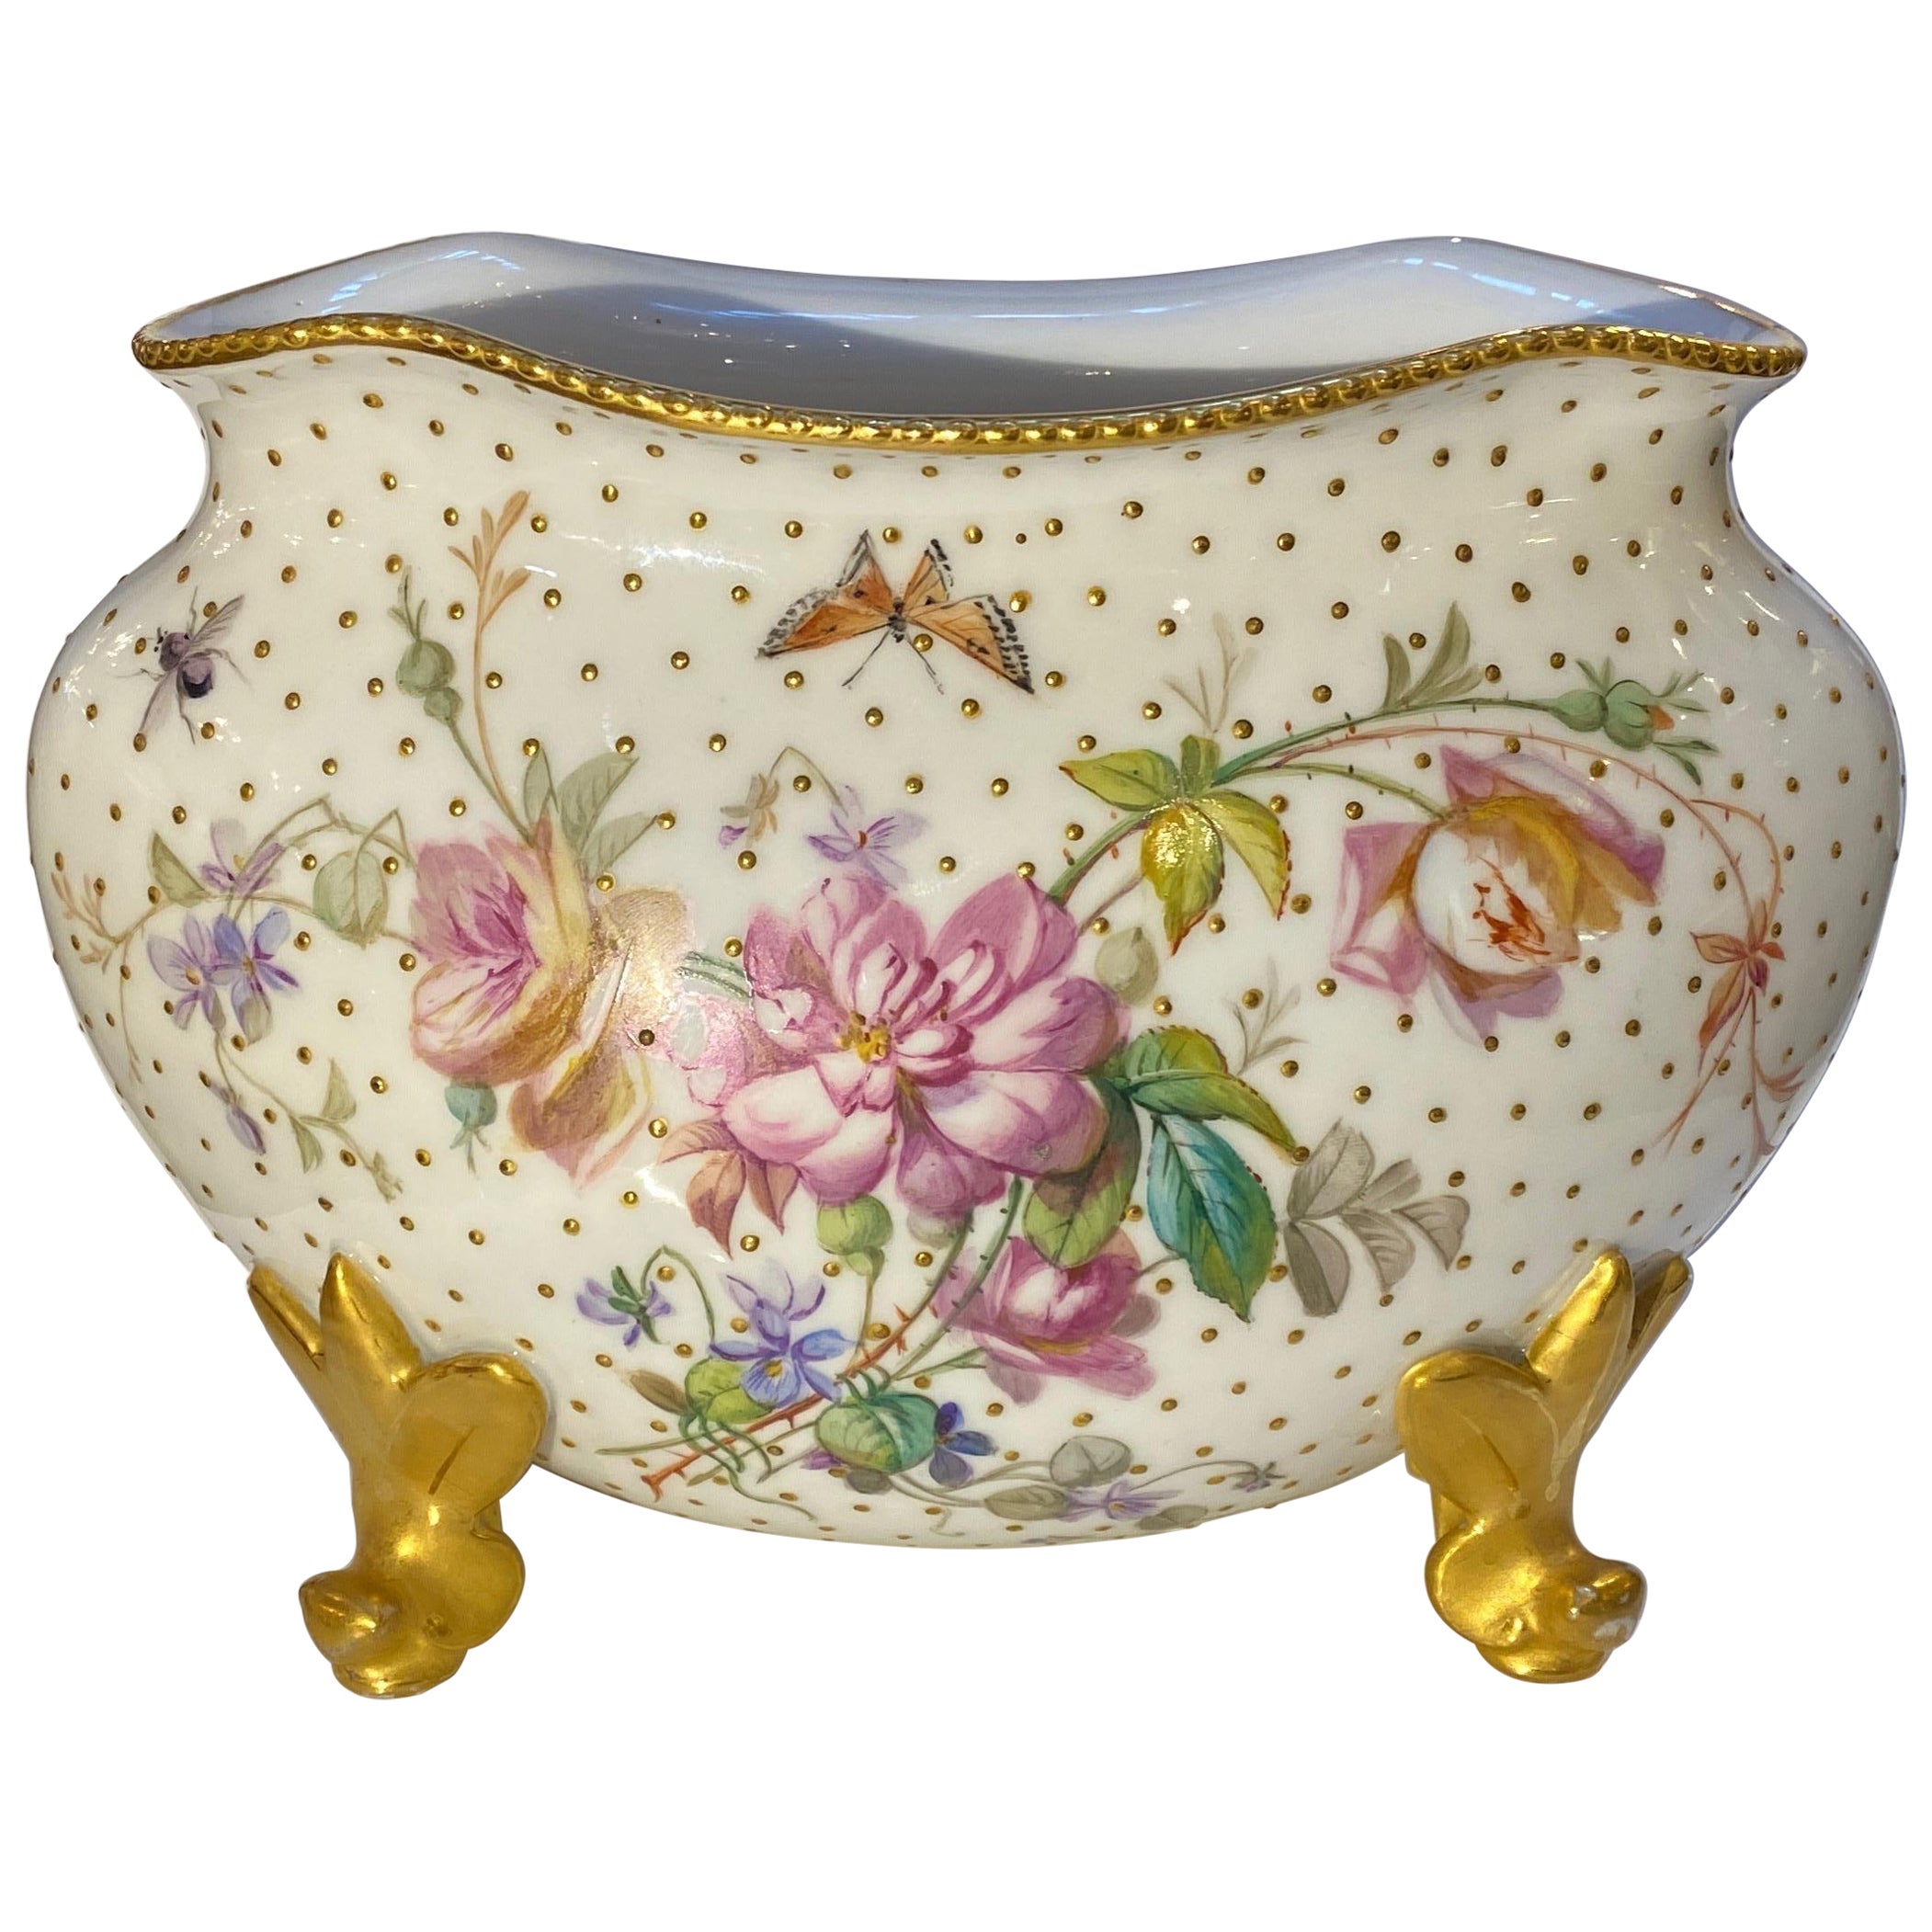 19th Century English Hand Painted Coalport Porcelain Oval Vase